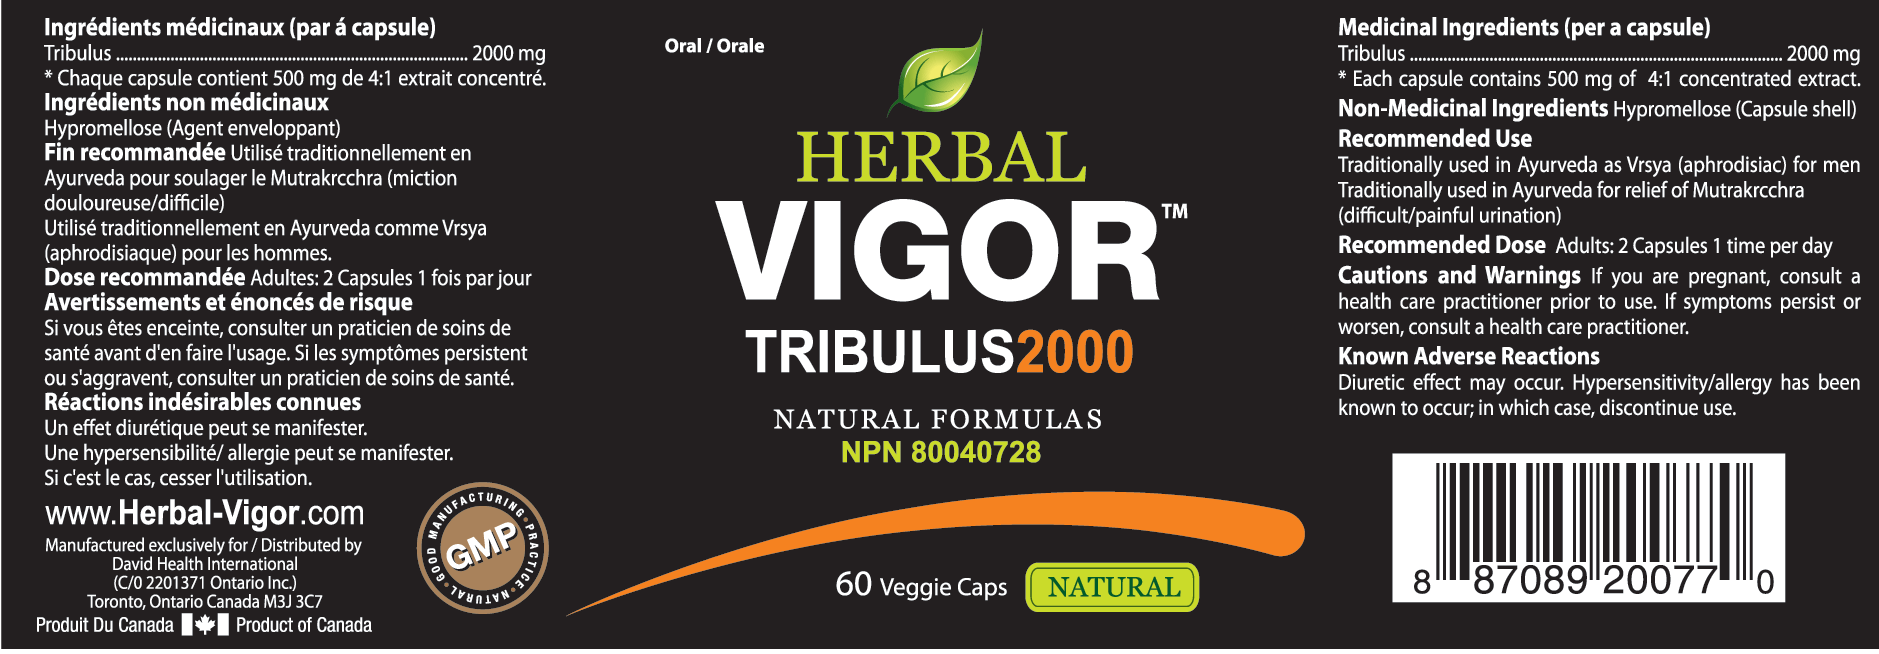 HERVAL VIGOR TRIBULUS 2000